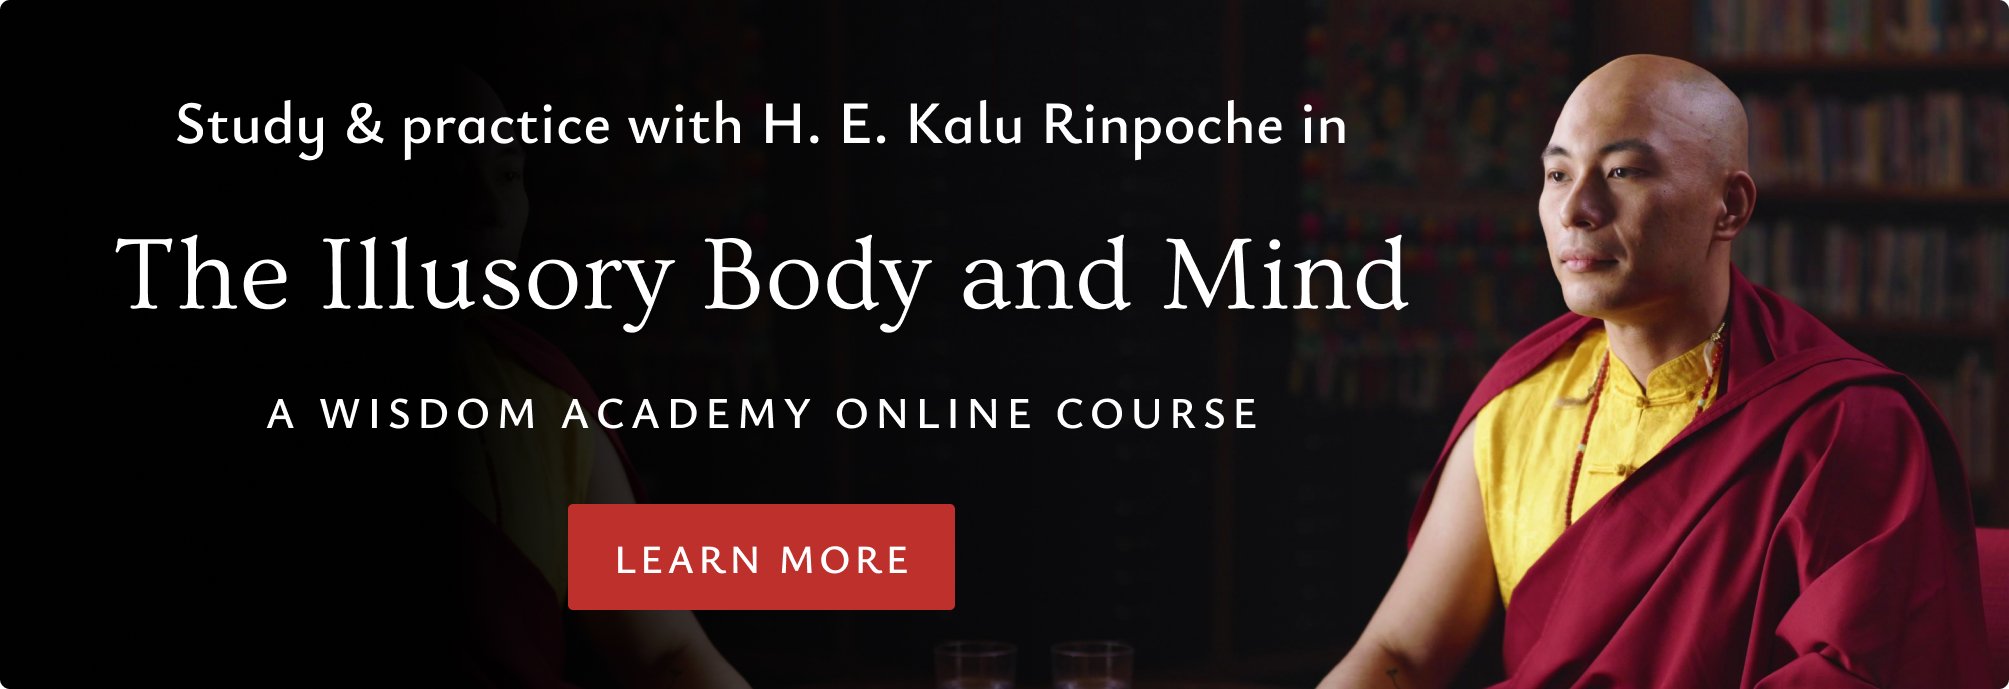 Kalu Rinpoche teachings interview video course